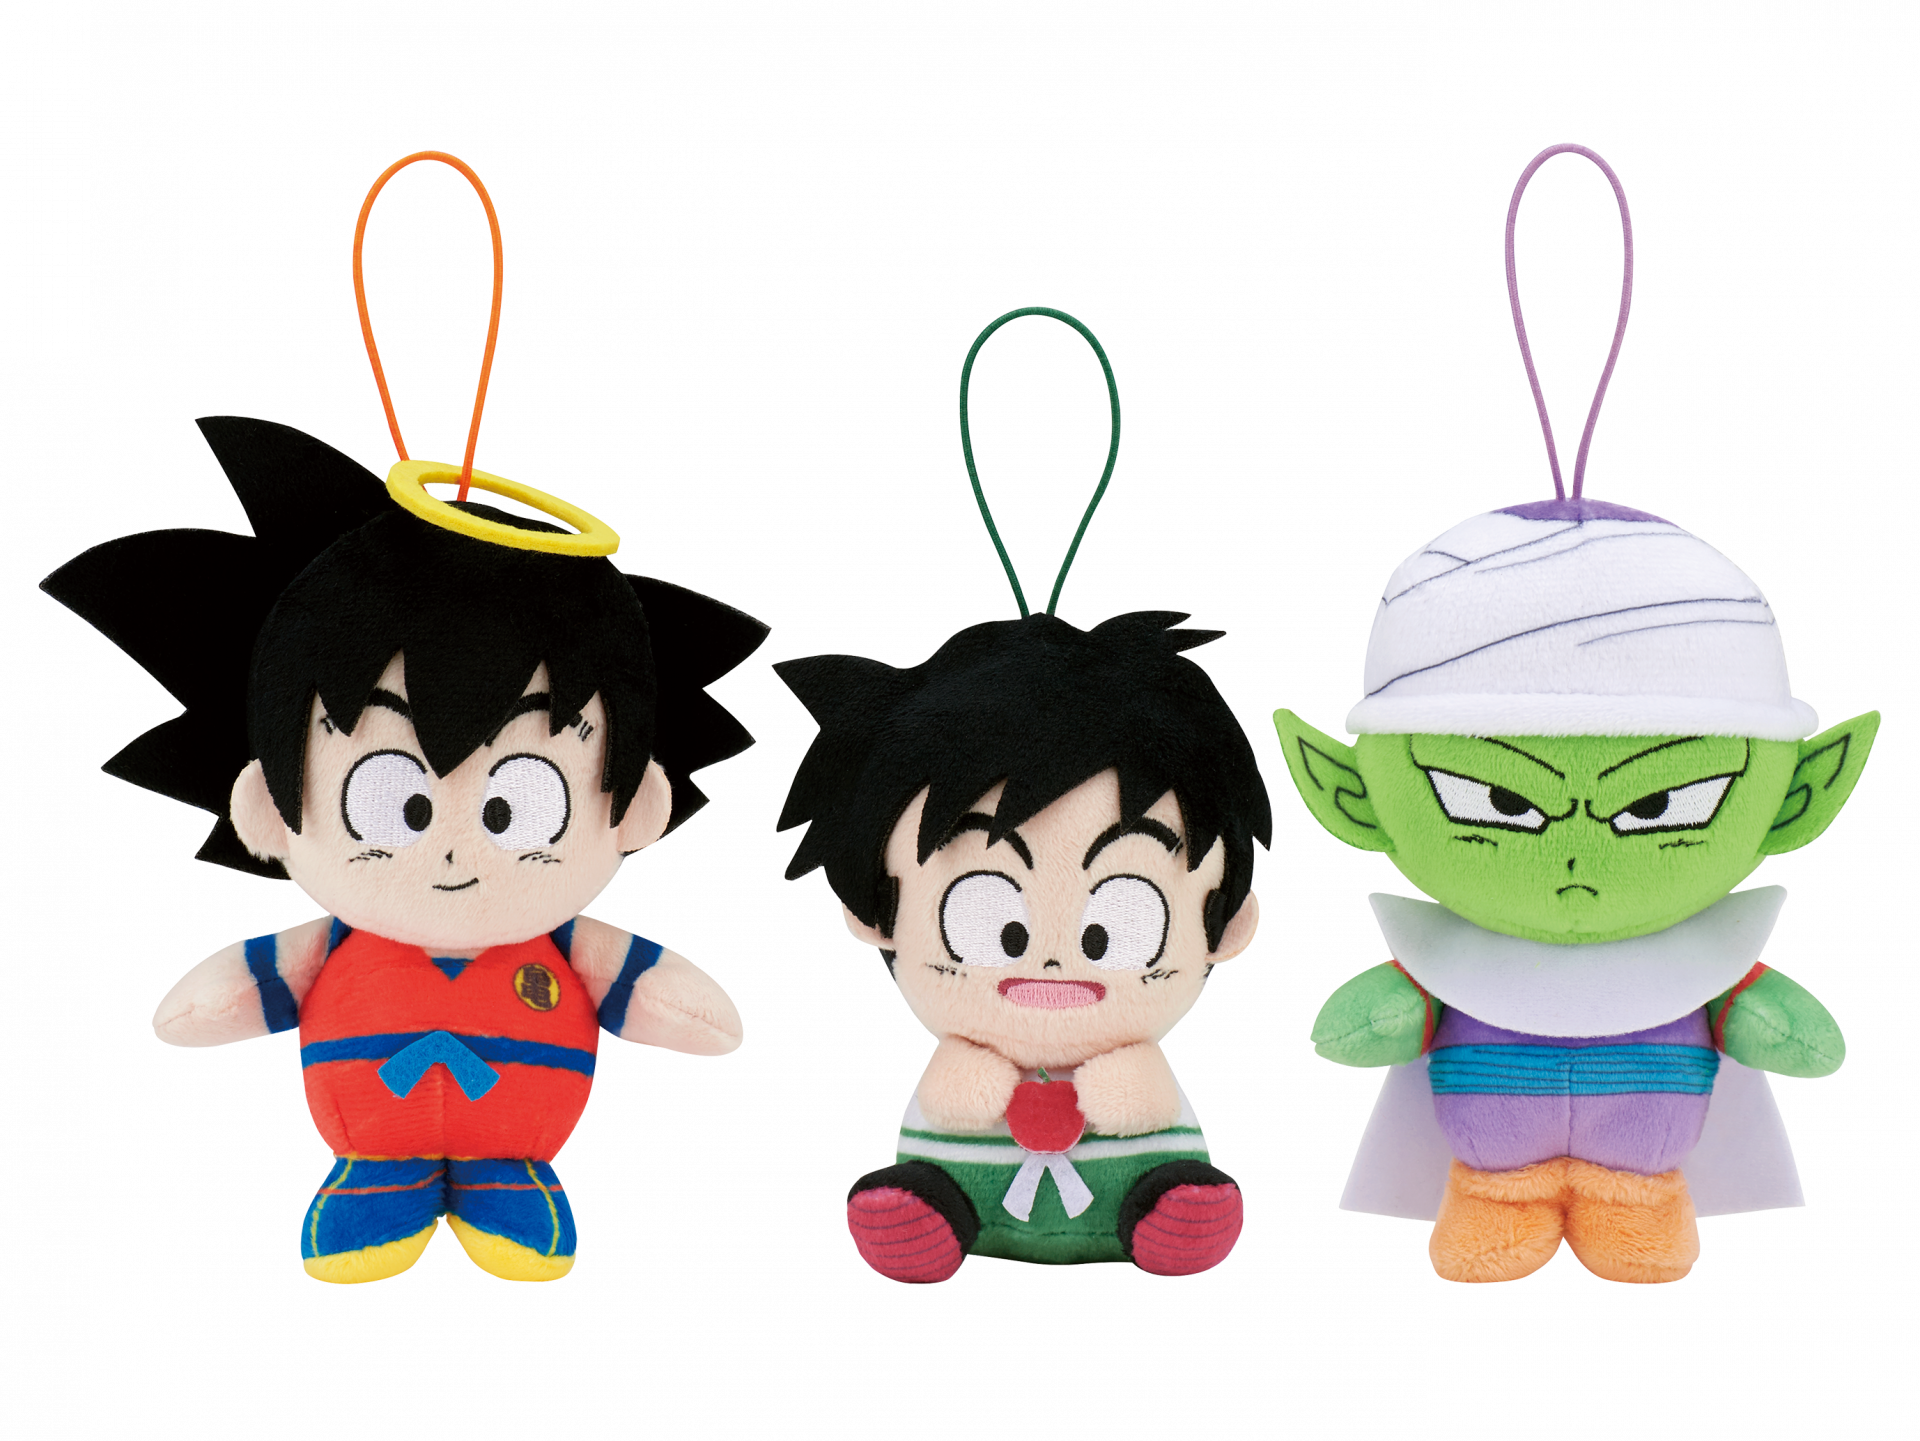 Palm-Sized Goku, Gohan, & Piccolo Plush Toys Are Coming to Crane Games!